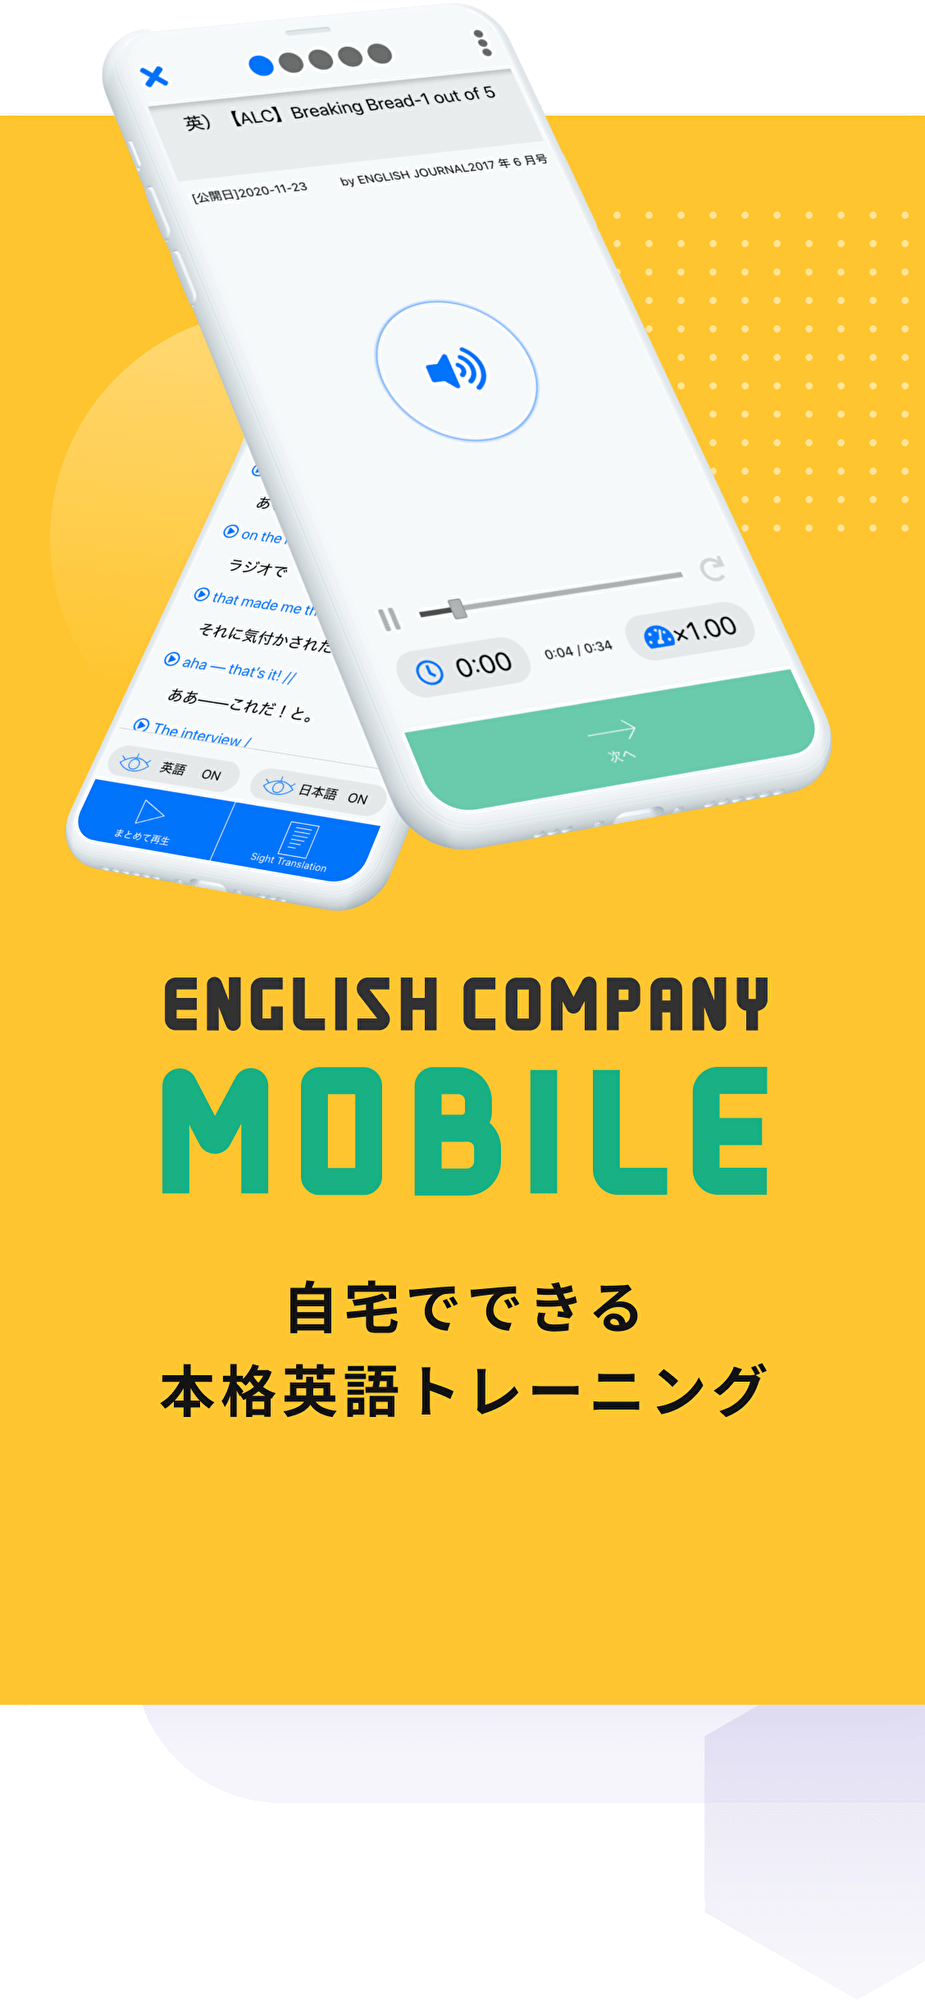 ENGLISH COMPANY MOBILE 自宅でできる本格英語トレーニング